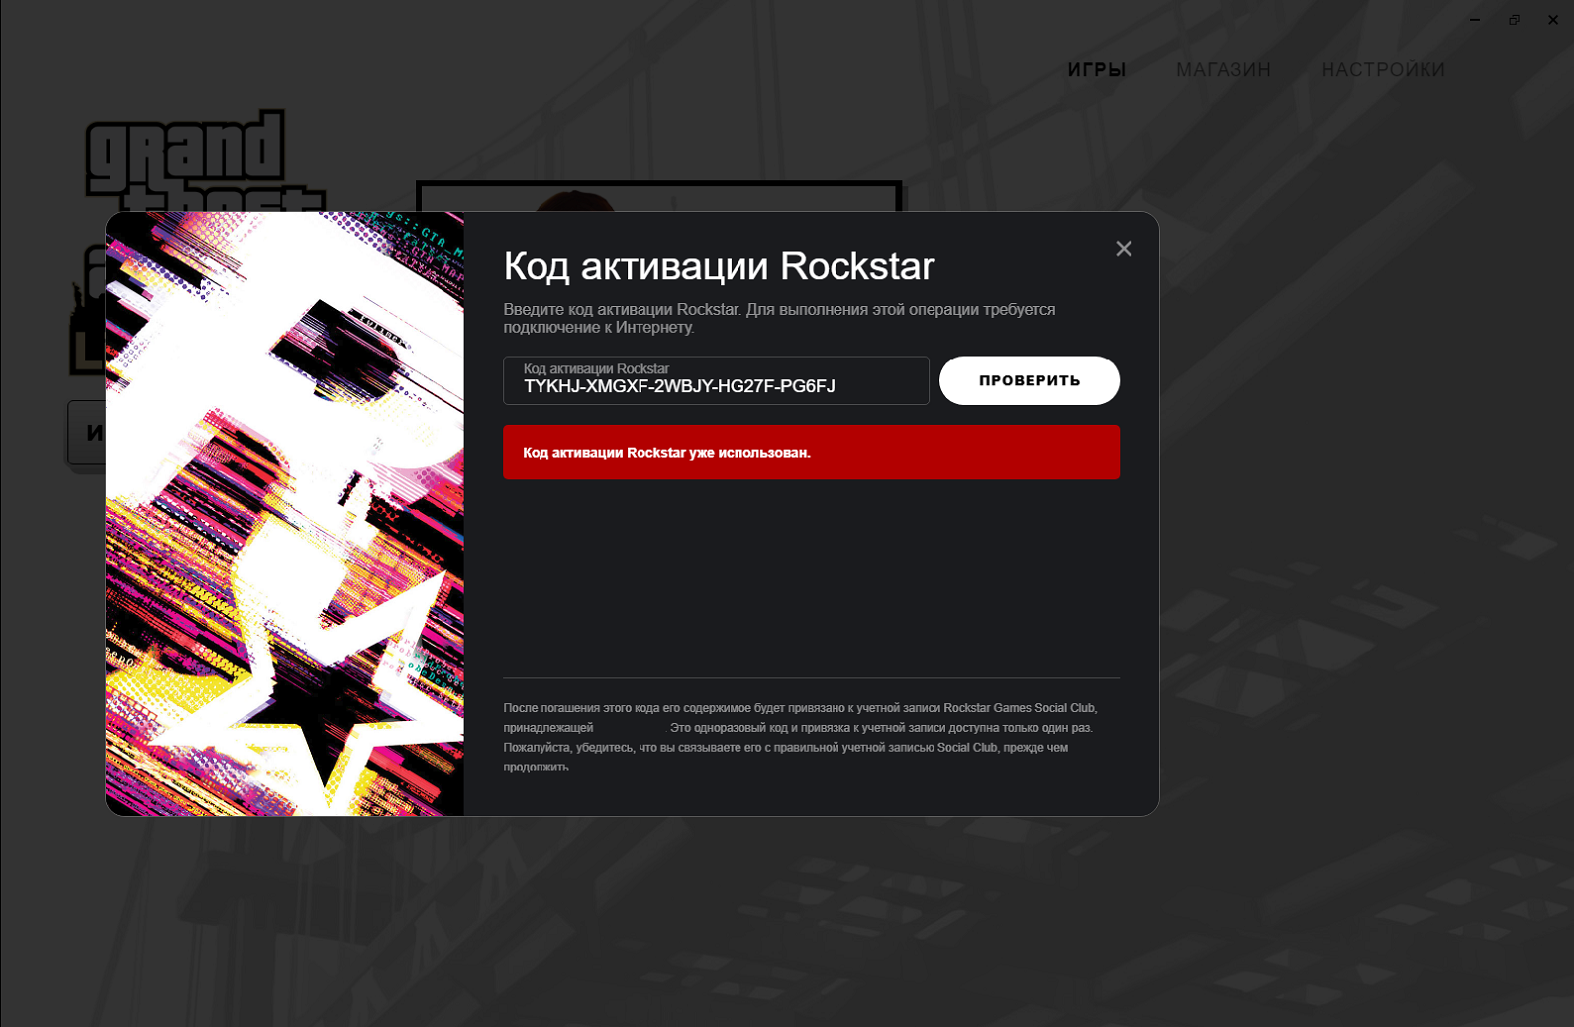 Rockstar games активация. Рокстар. Код активации Rockstar. Код активации рокстара. Коды активации рокстар.